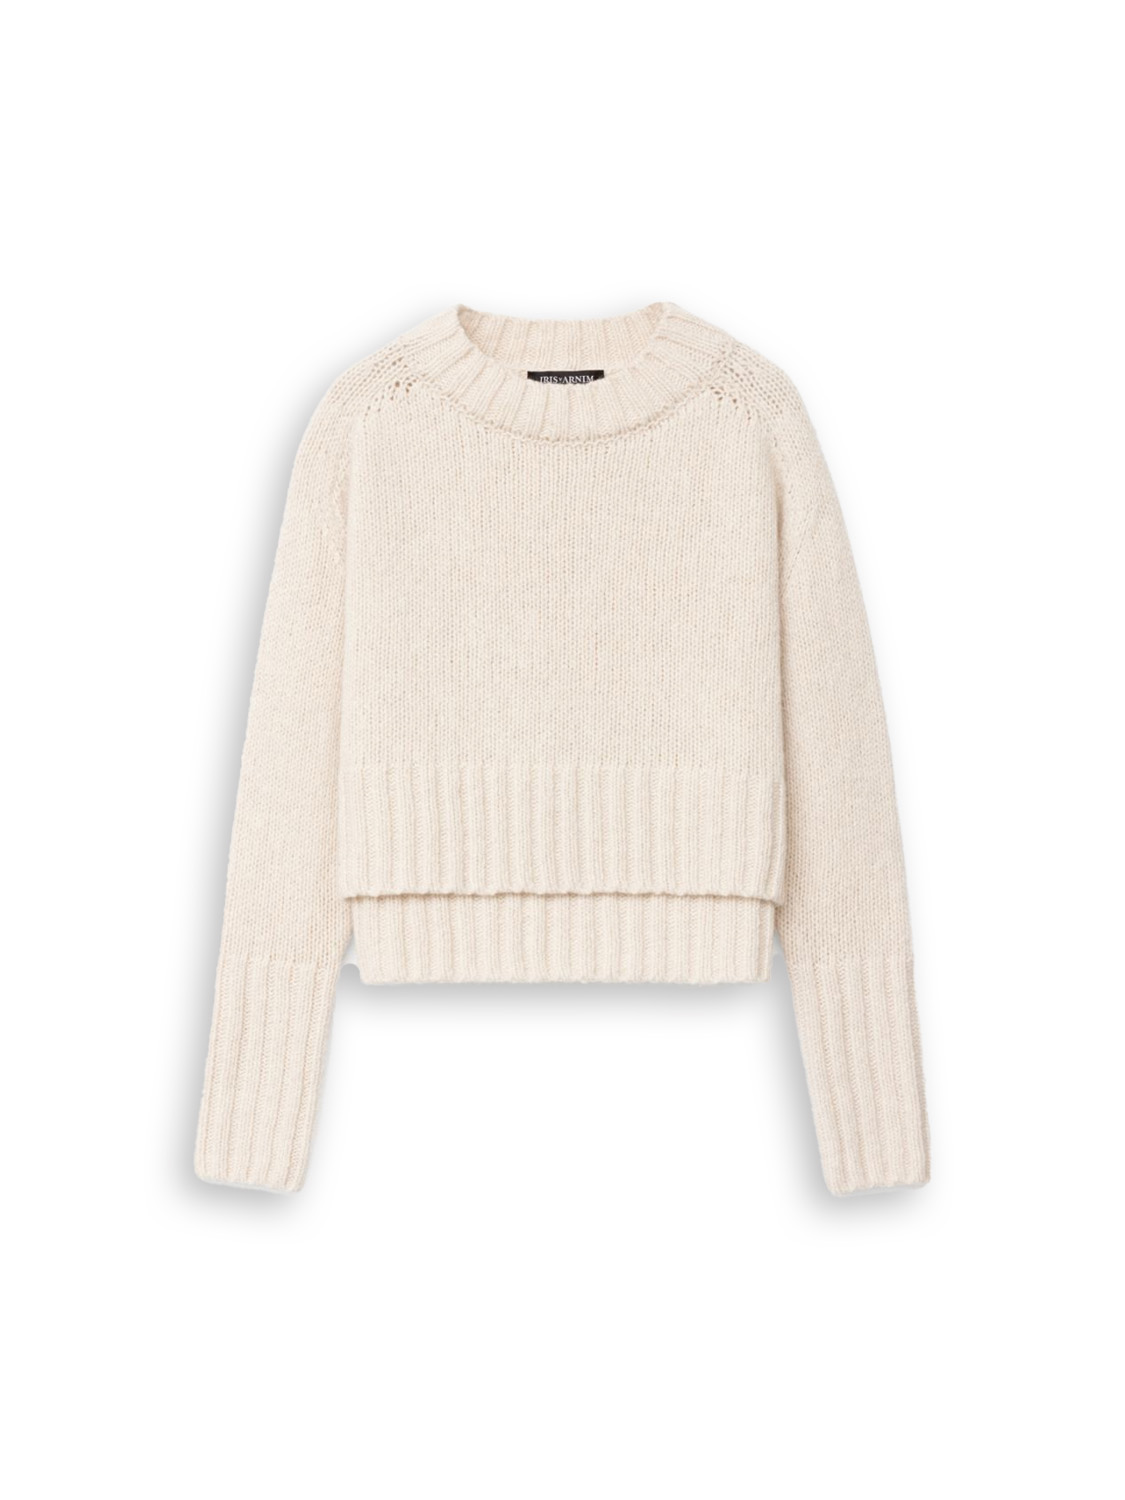 Dakota - Coarse knit wool sweater